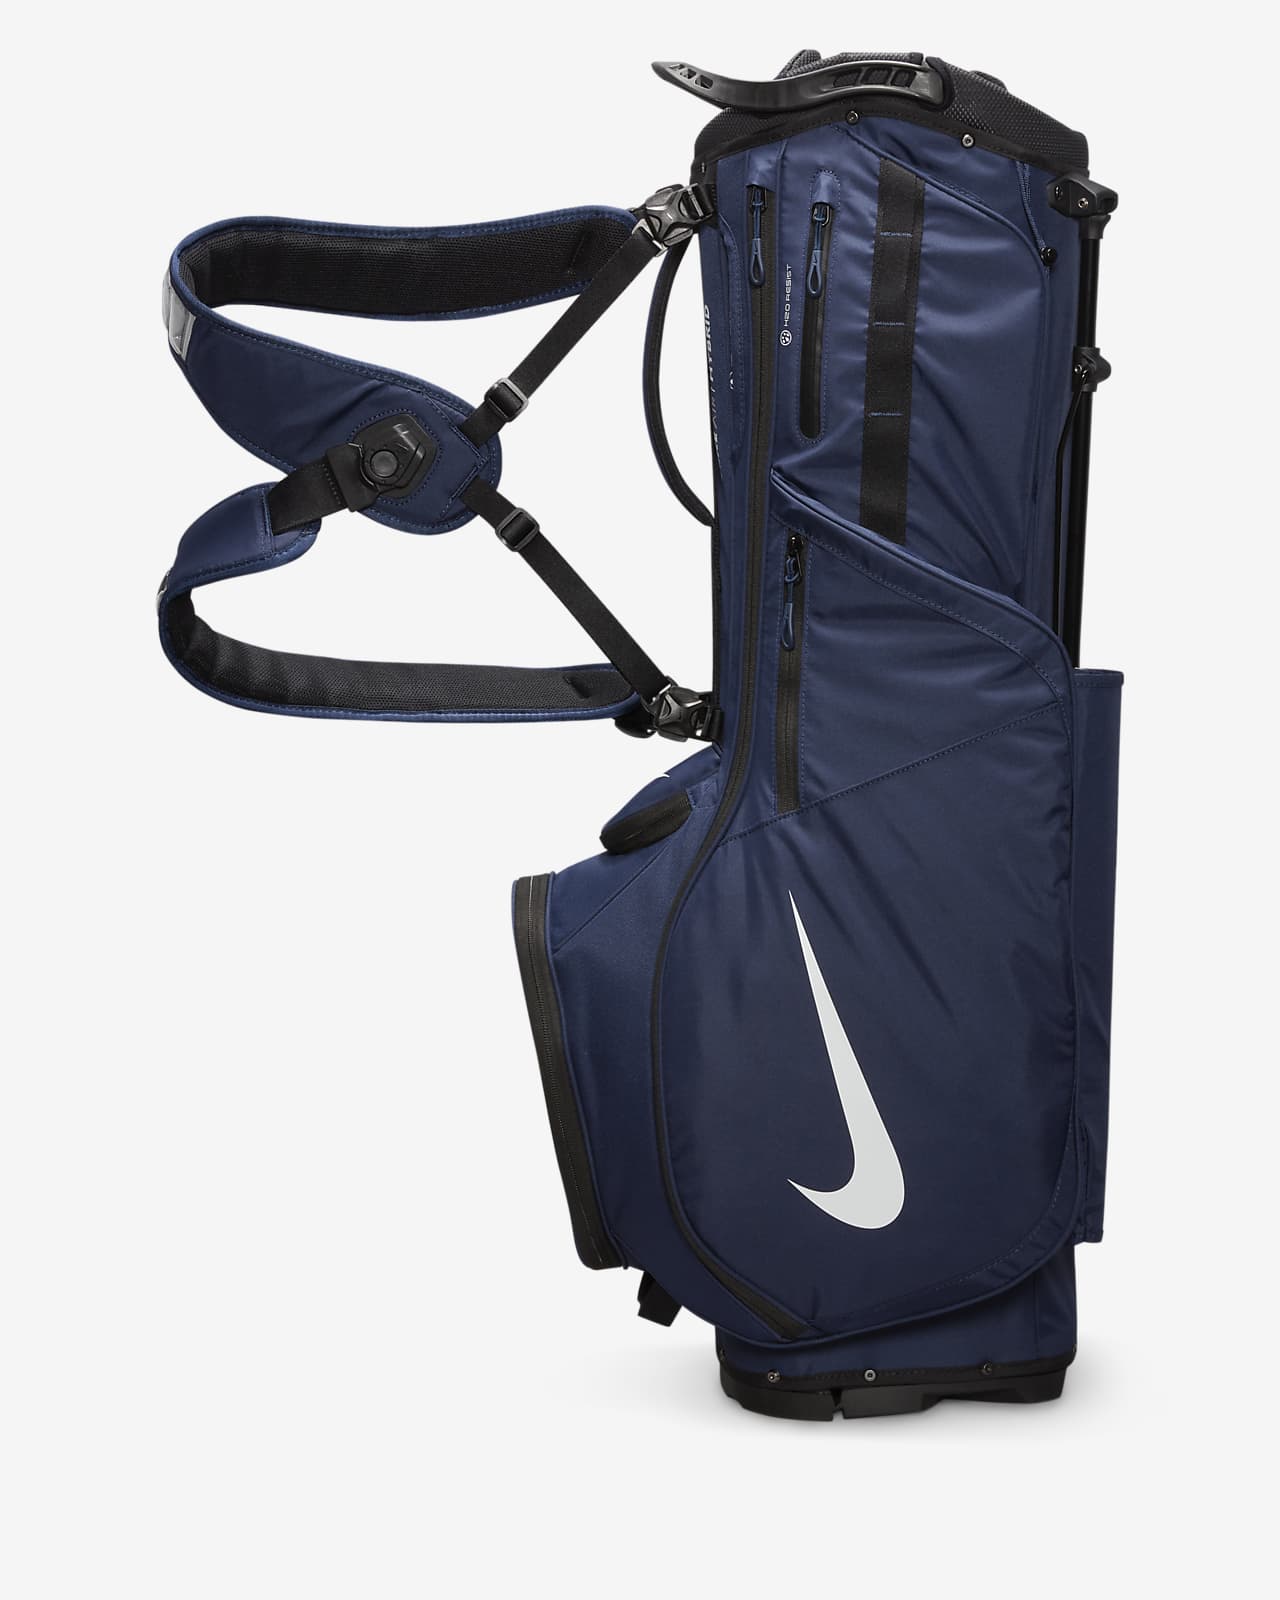 Custom Golf Bag - sporting goods - by owner - sale - craigslist